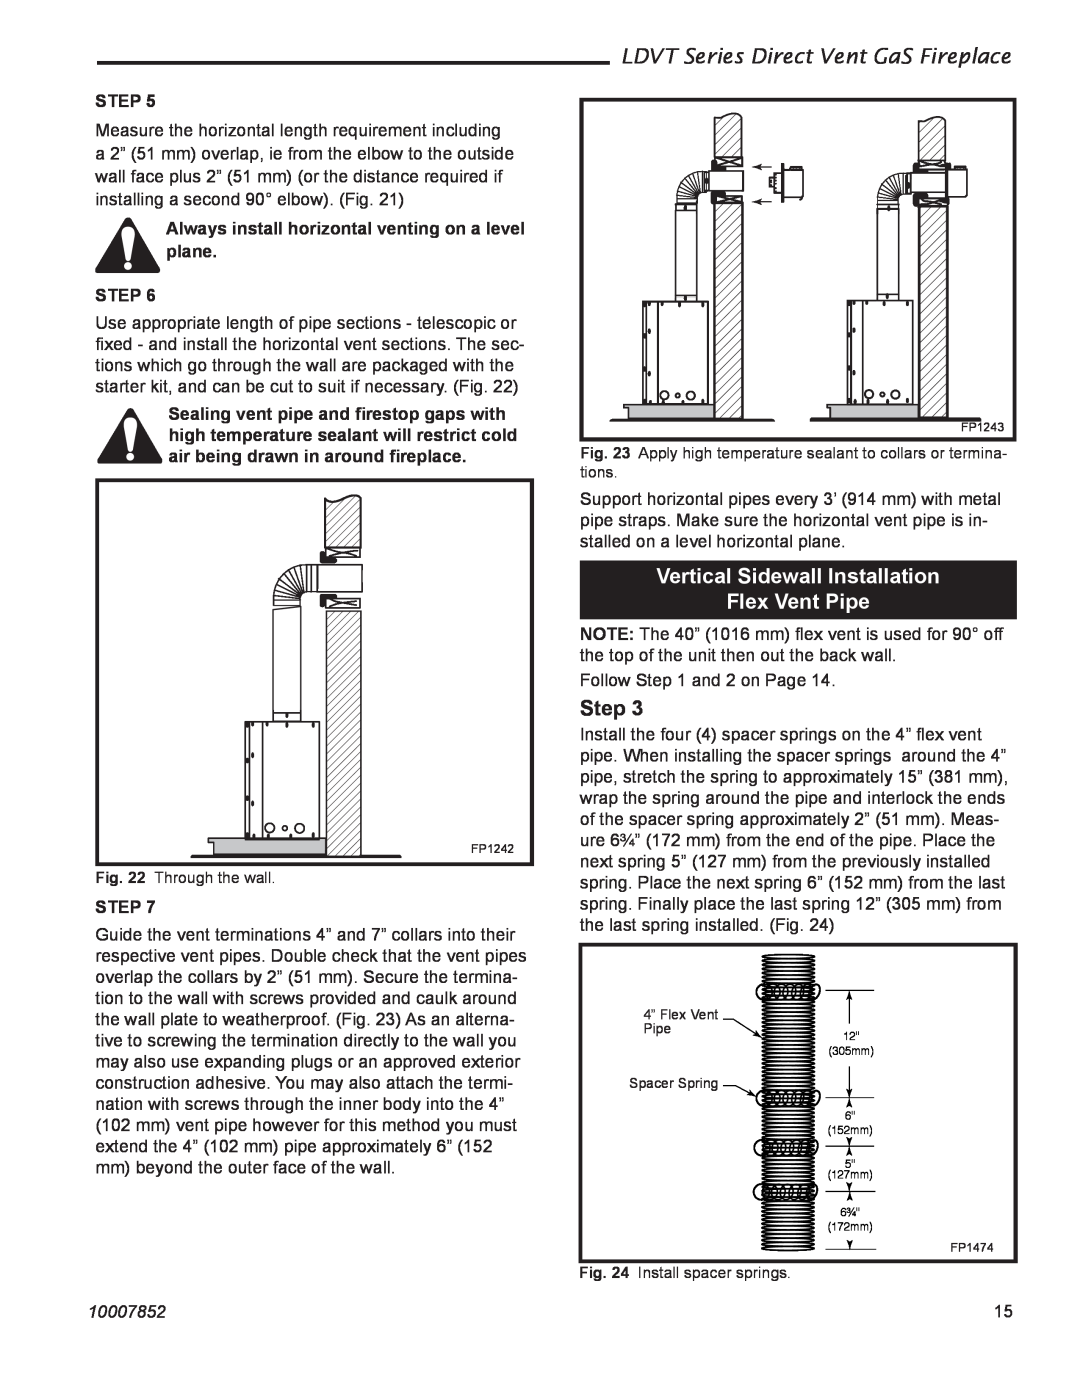 Vermont Casting 43LDVT manual Vertical Sidewall Installation Flex Vent Pipe, LDVT Series Direct Vent GaS Fireplace, Step 